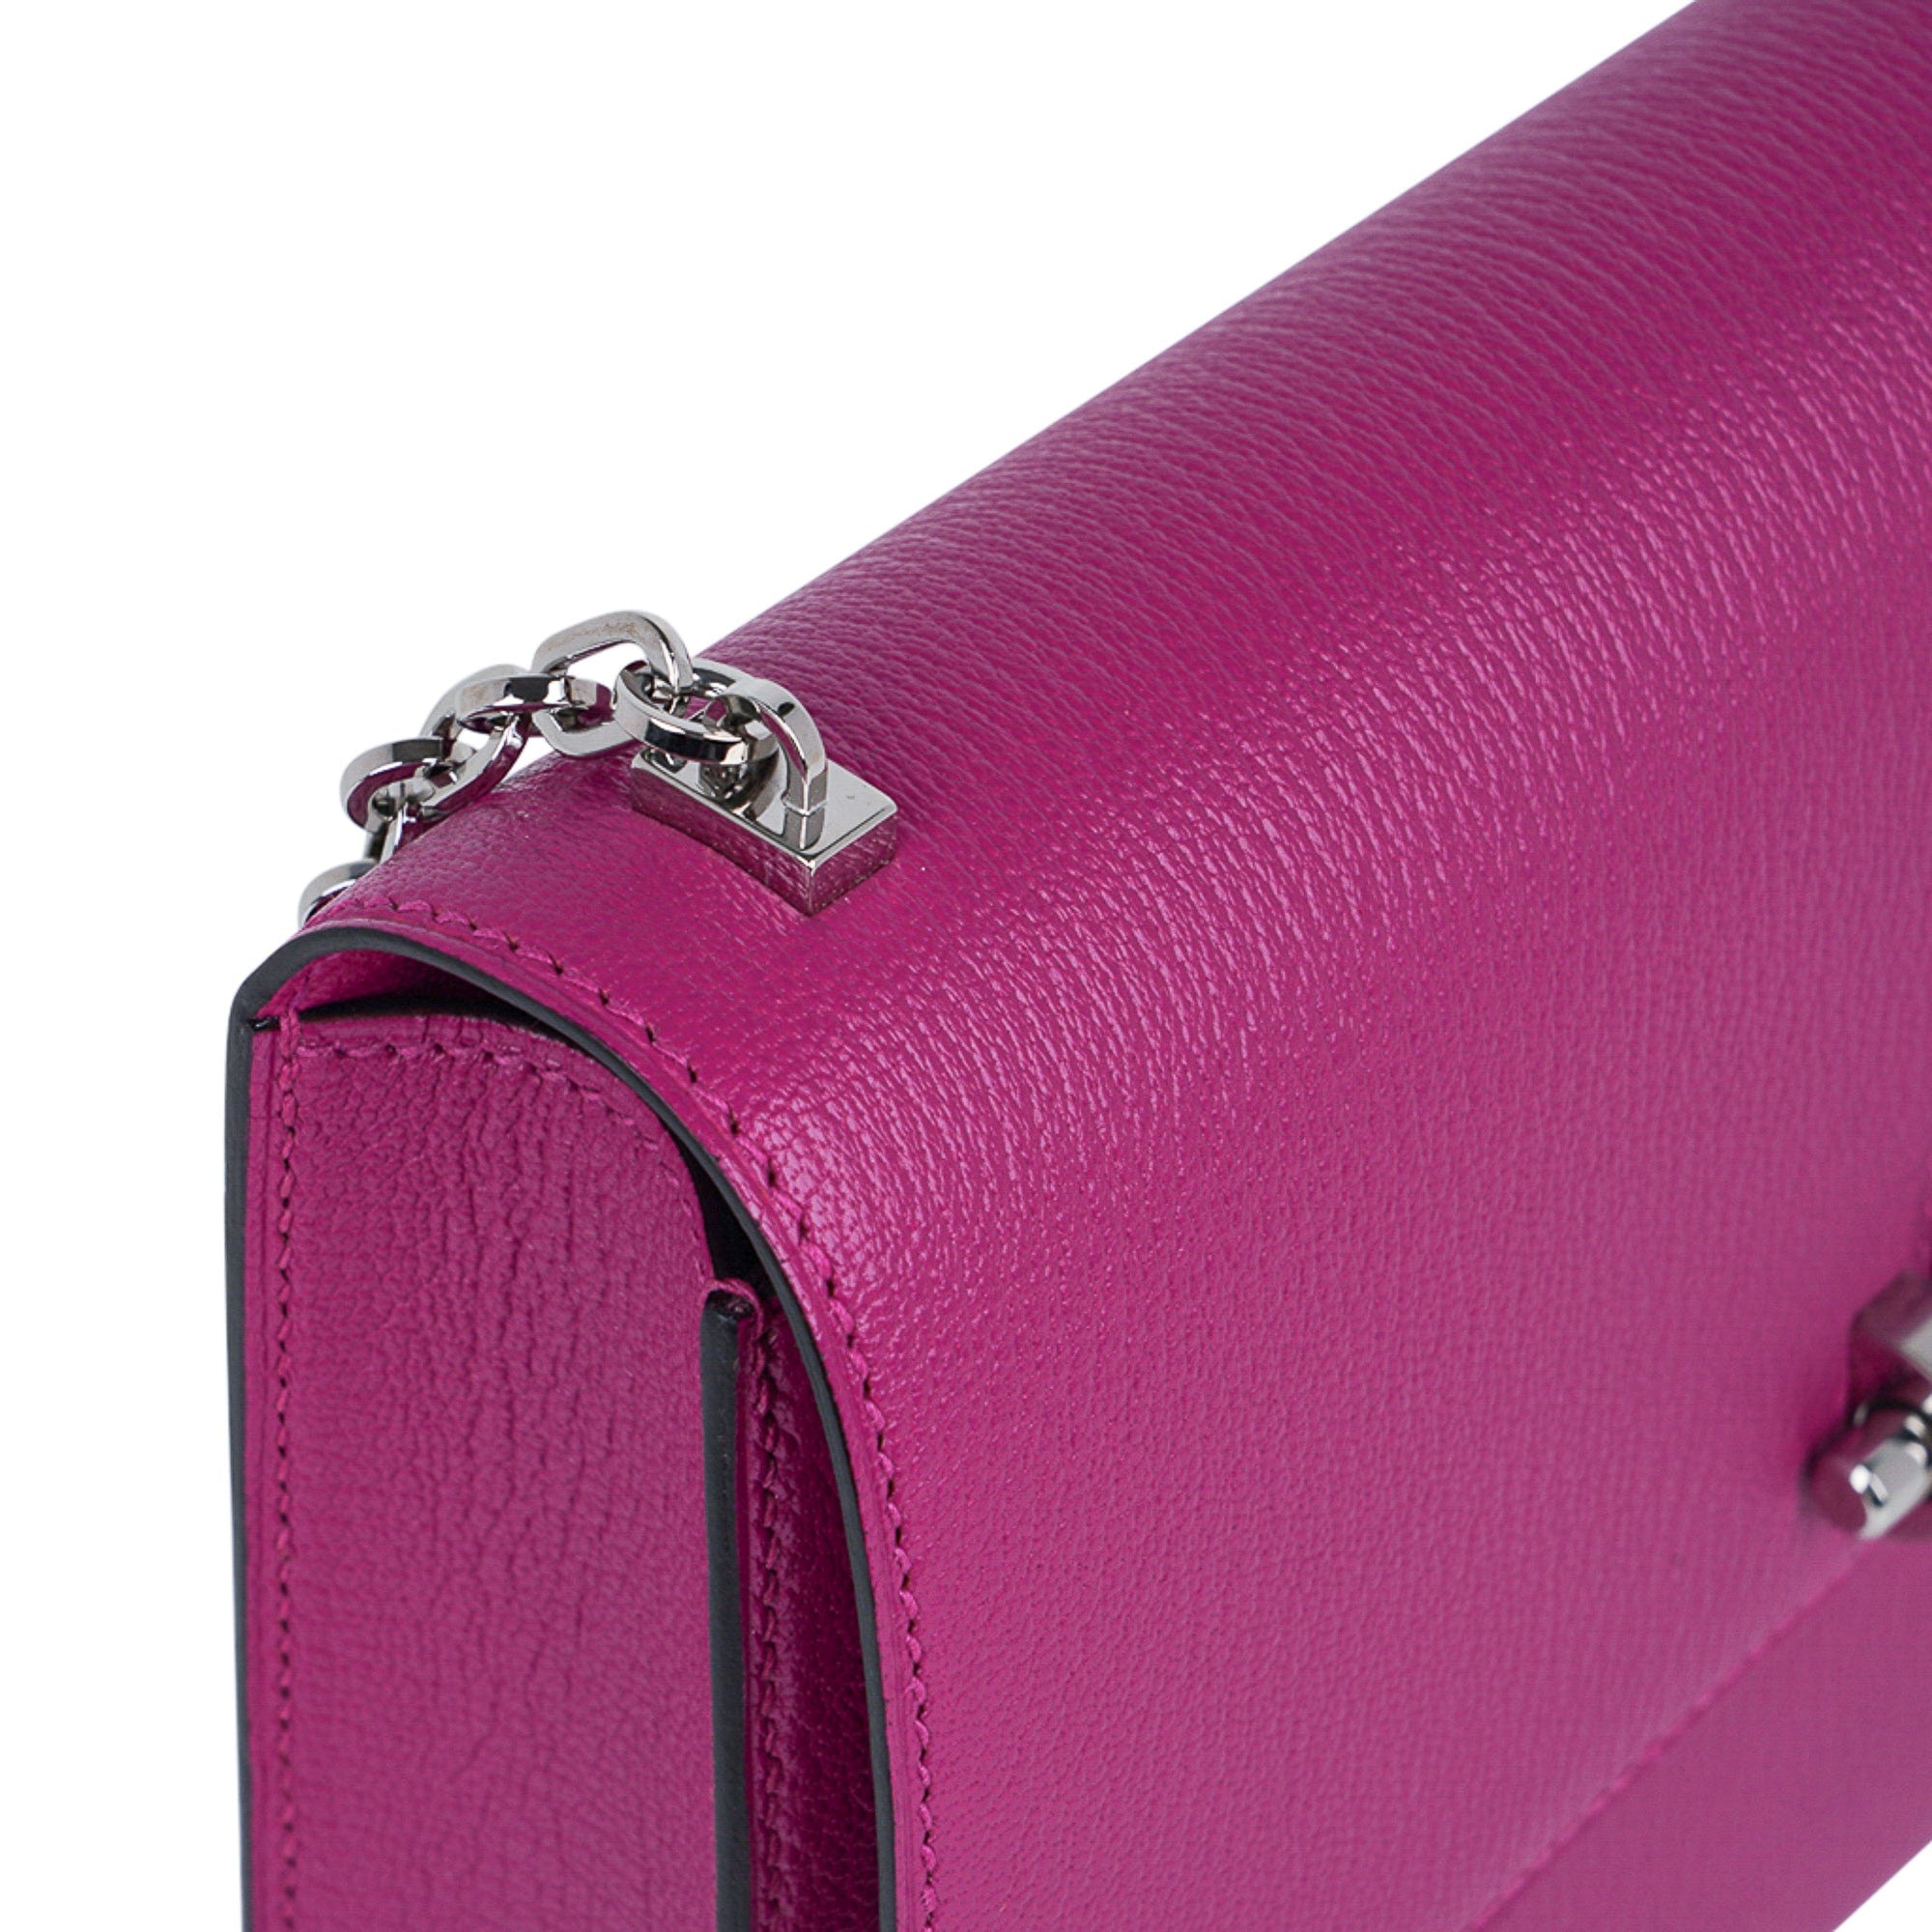 Gorgeous Hermes Saphir Verrou handbag 2017 New